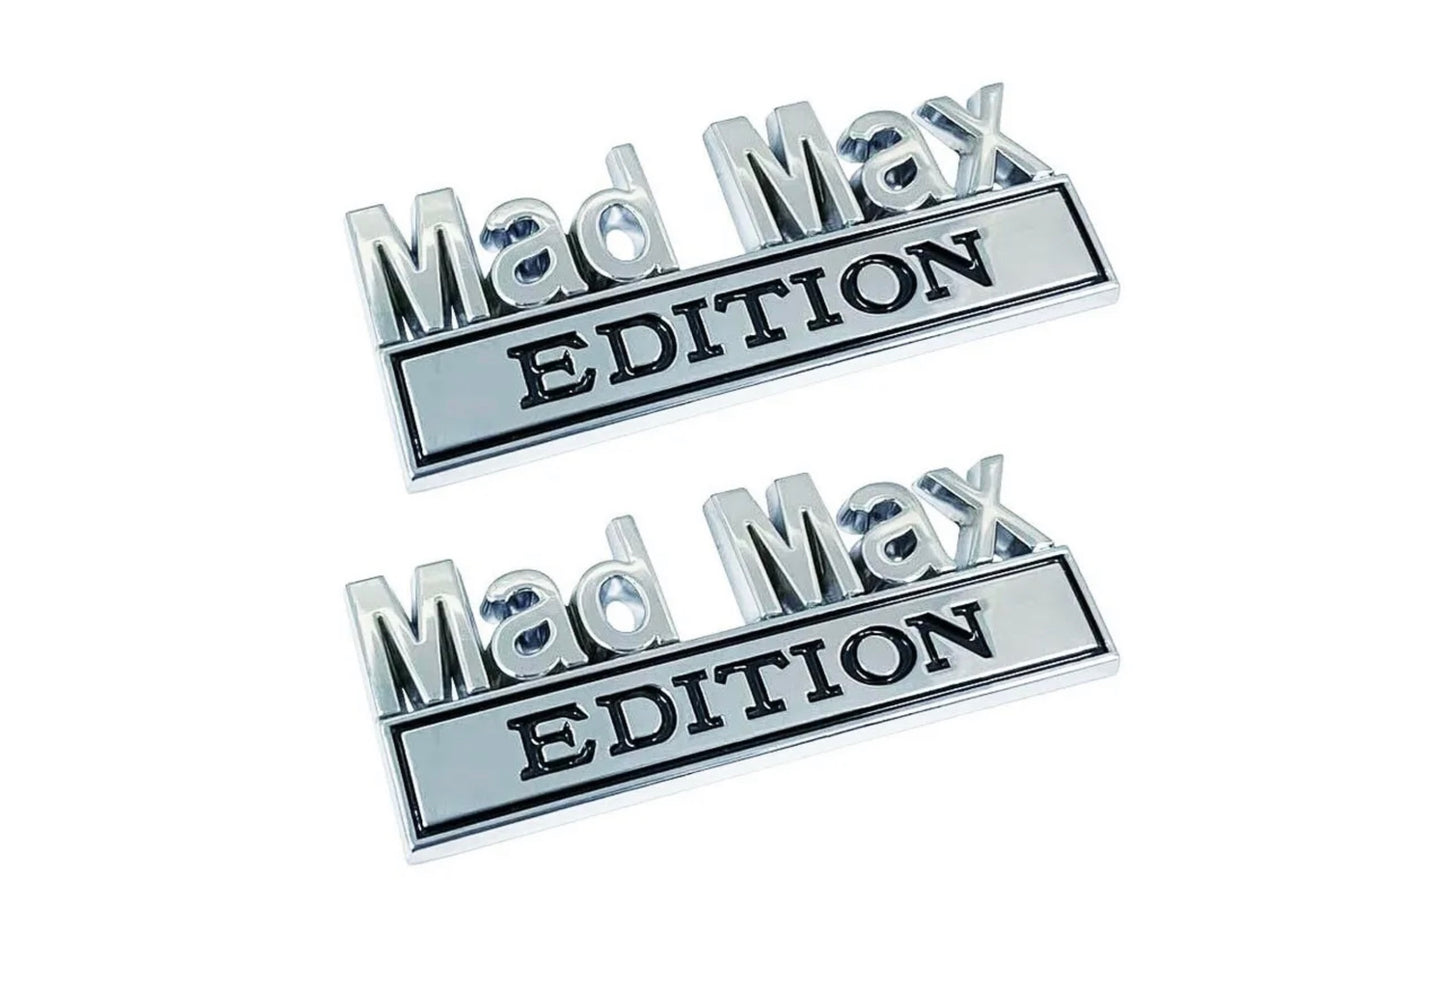 MAD MAX EDITION - 1x3 Metal Emblem USA MADE